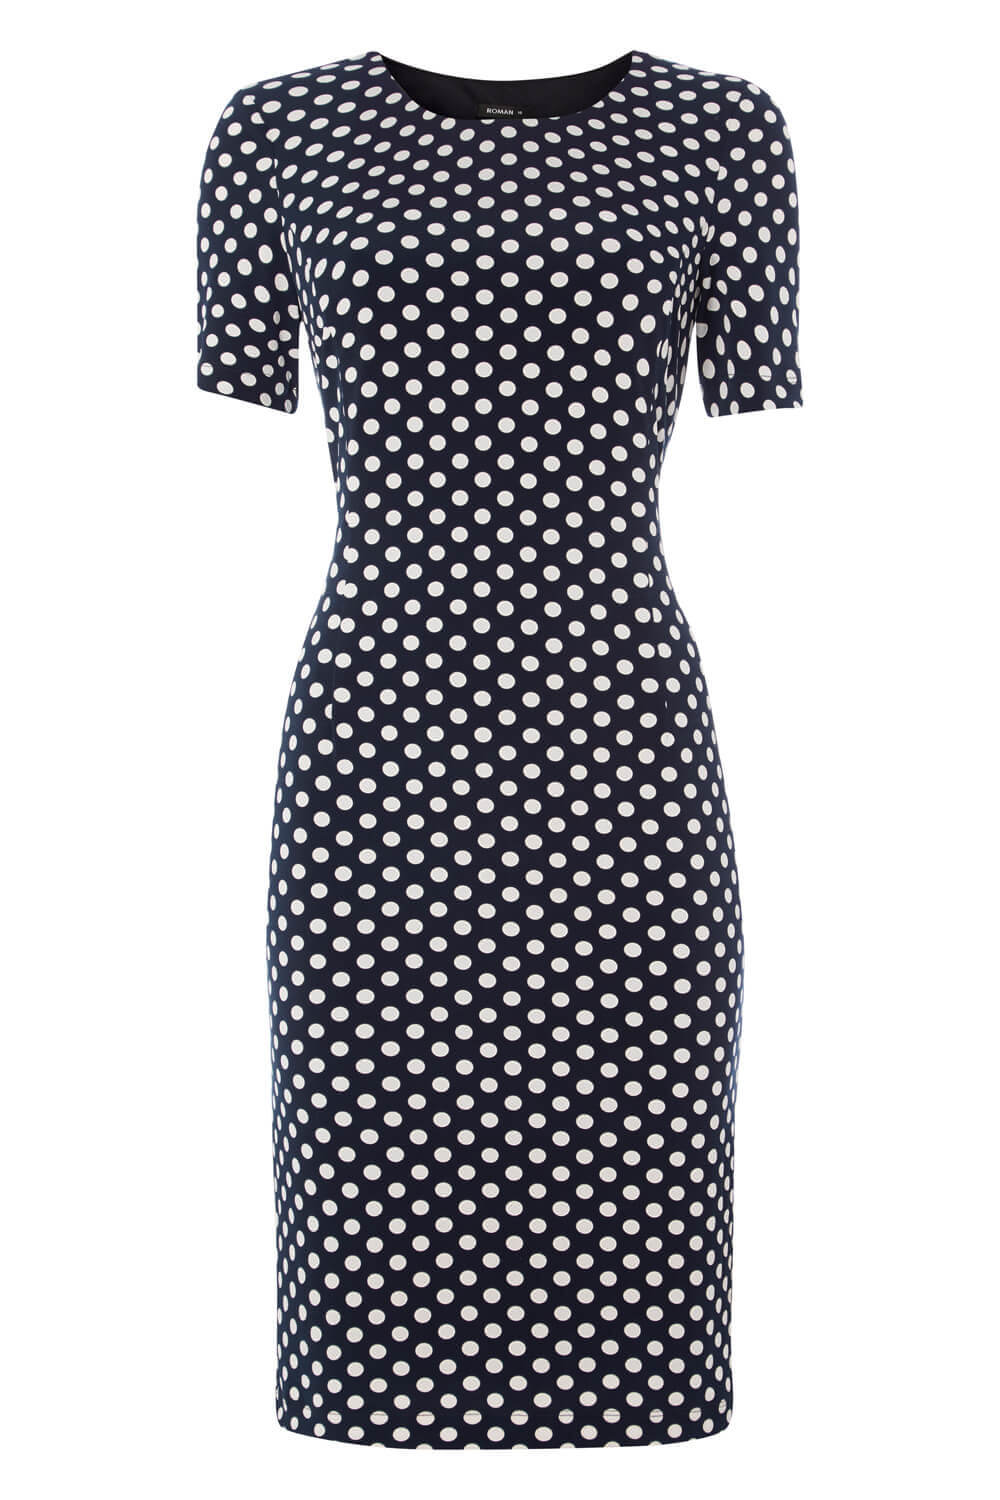  Polka Dot Short Sleeve Dress, Image 5 of 5